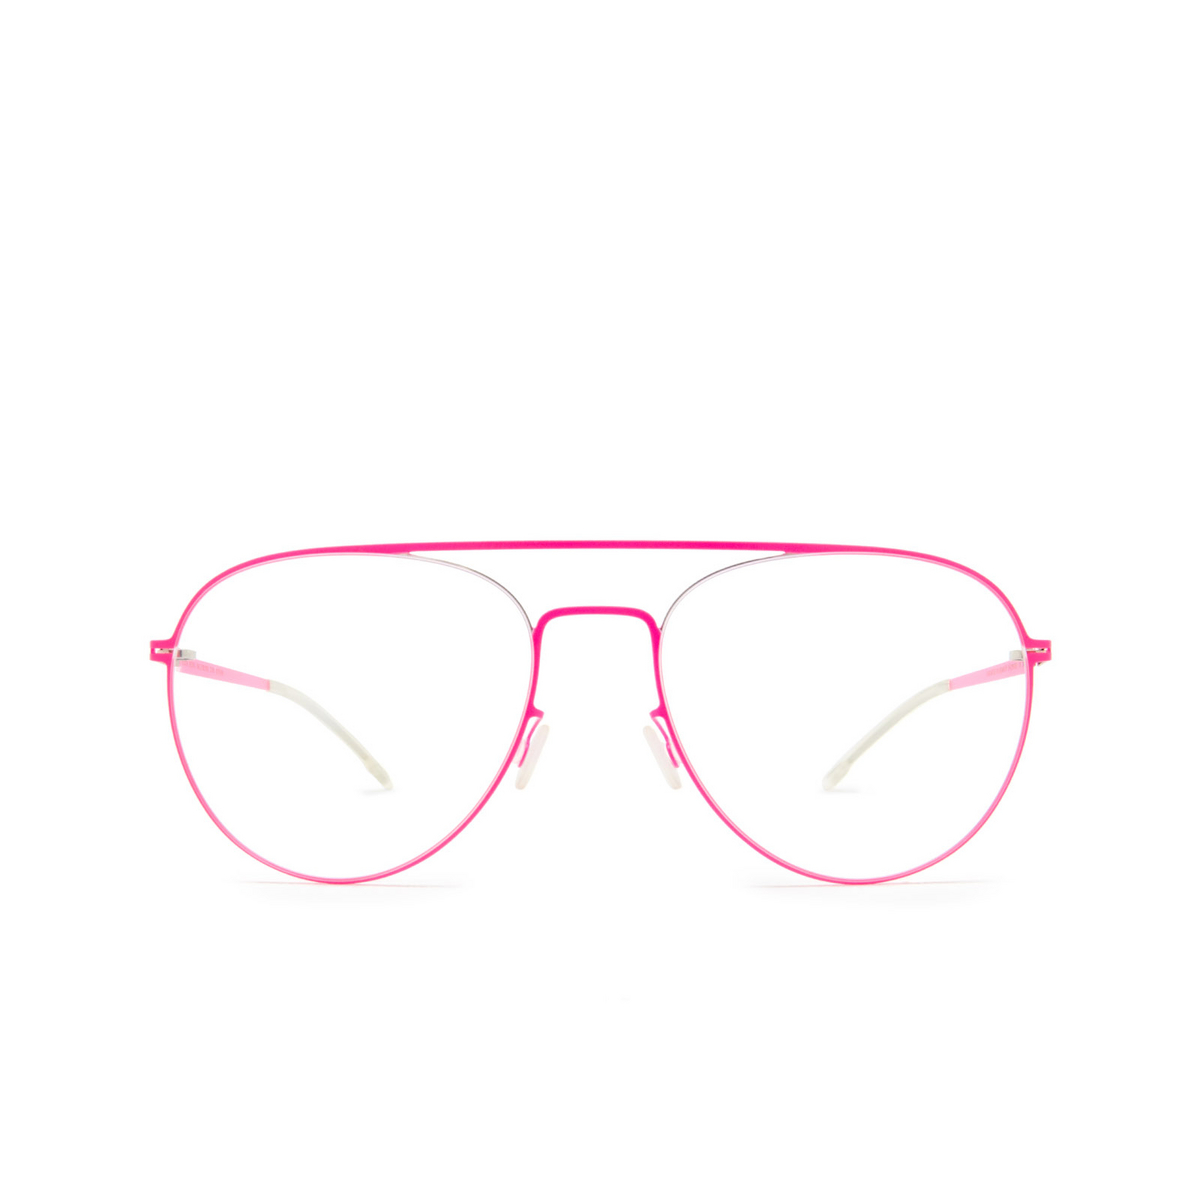 Mykita EERO Eyeglasses 151 Silver/Neon Pink - front view